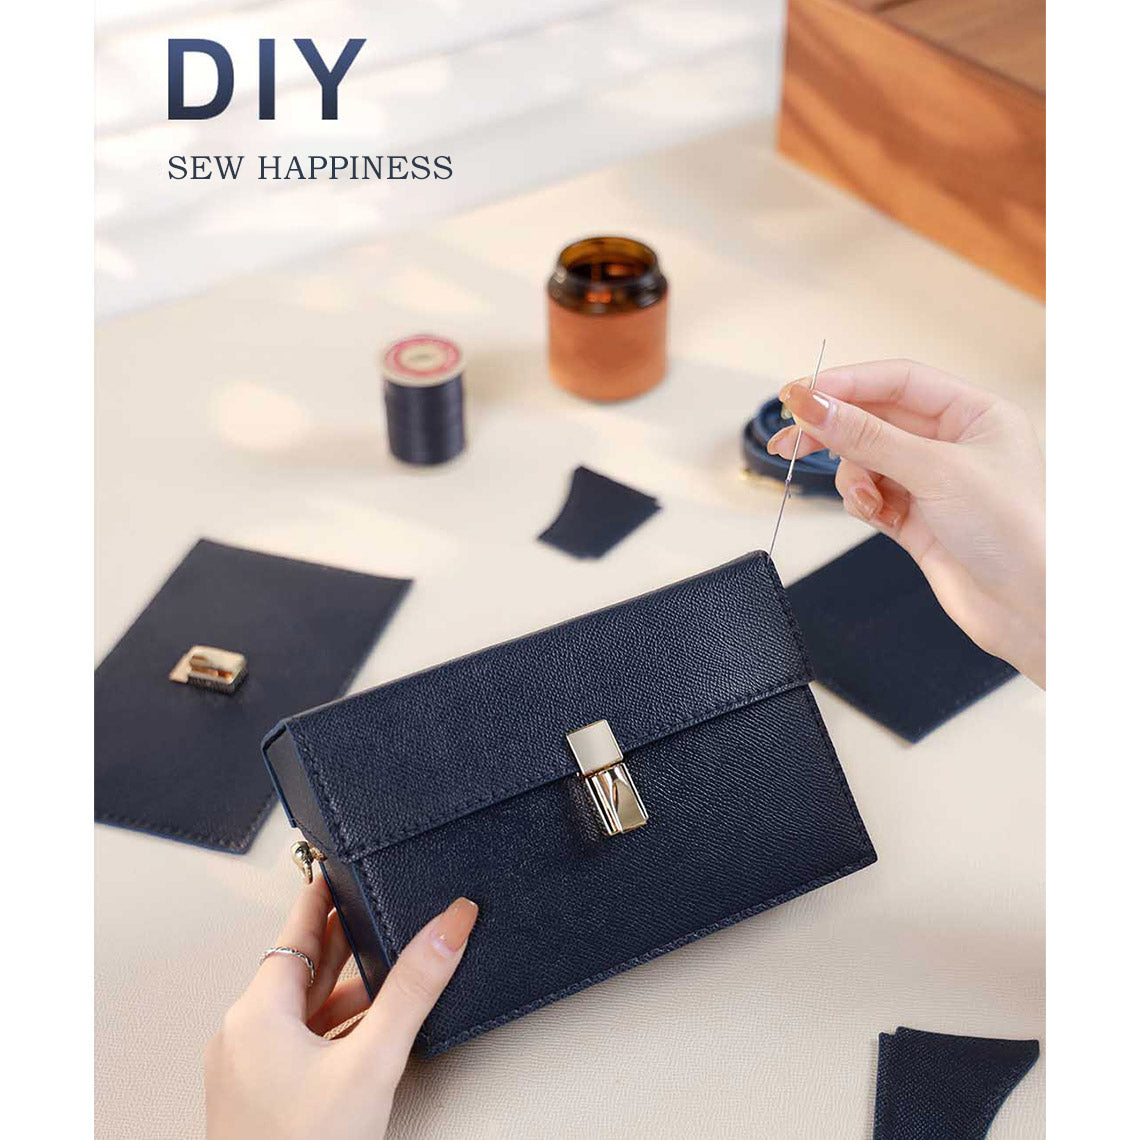 POPSEWING® Leather Box Phone Bag DIY Kit